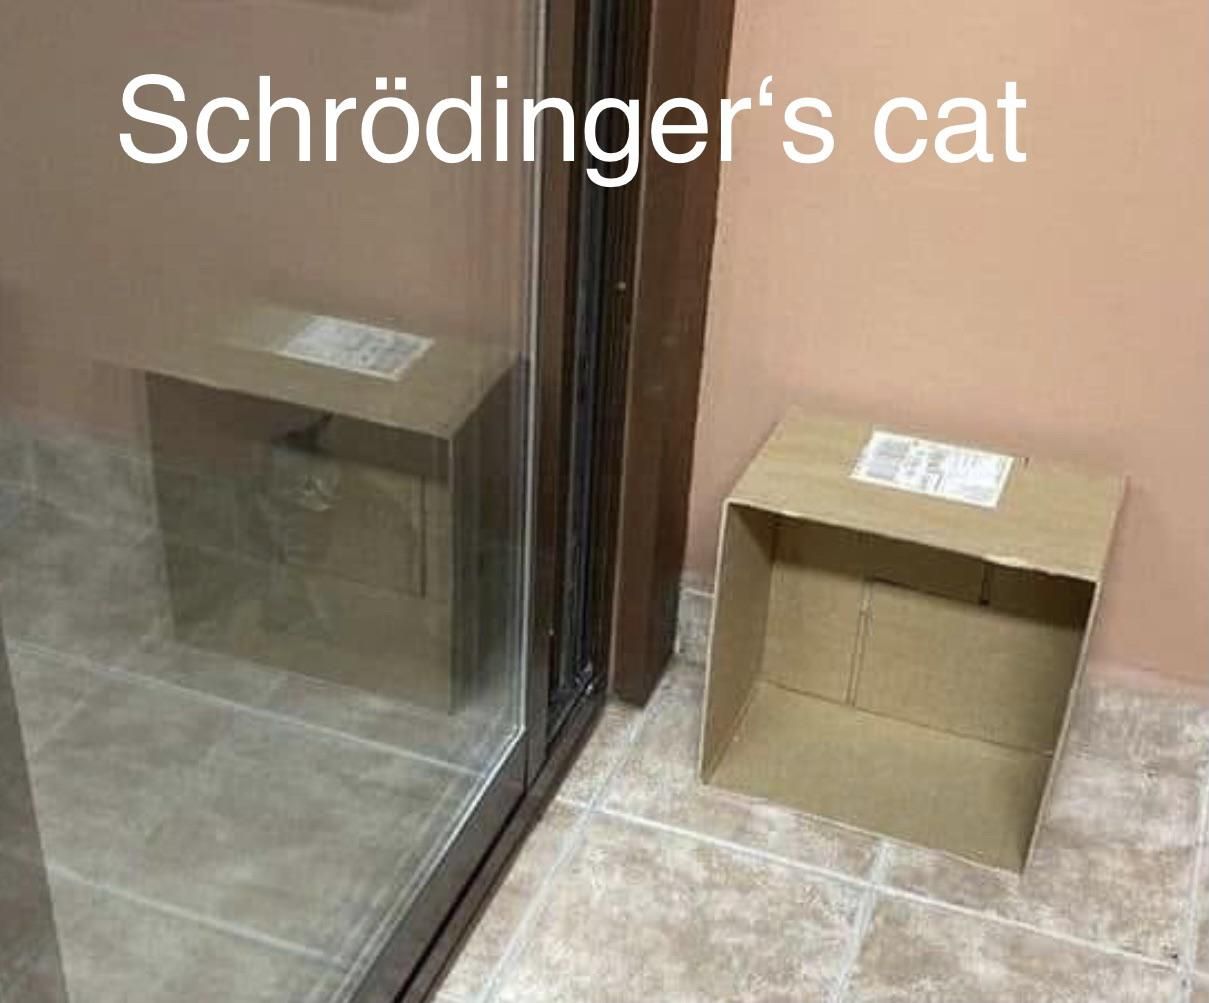 Schrödinger‘s cat